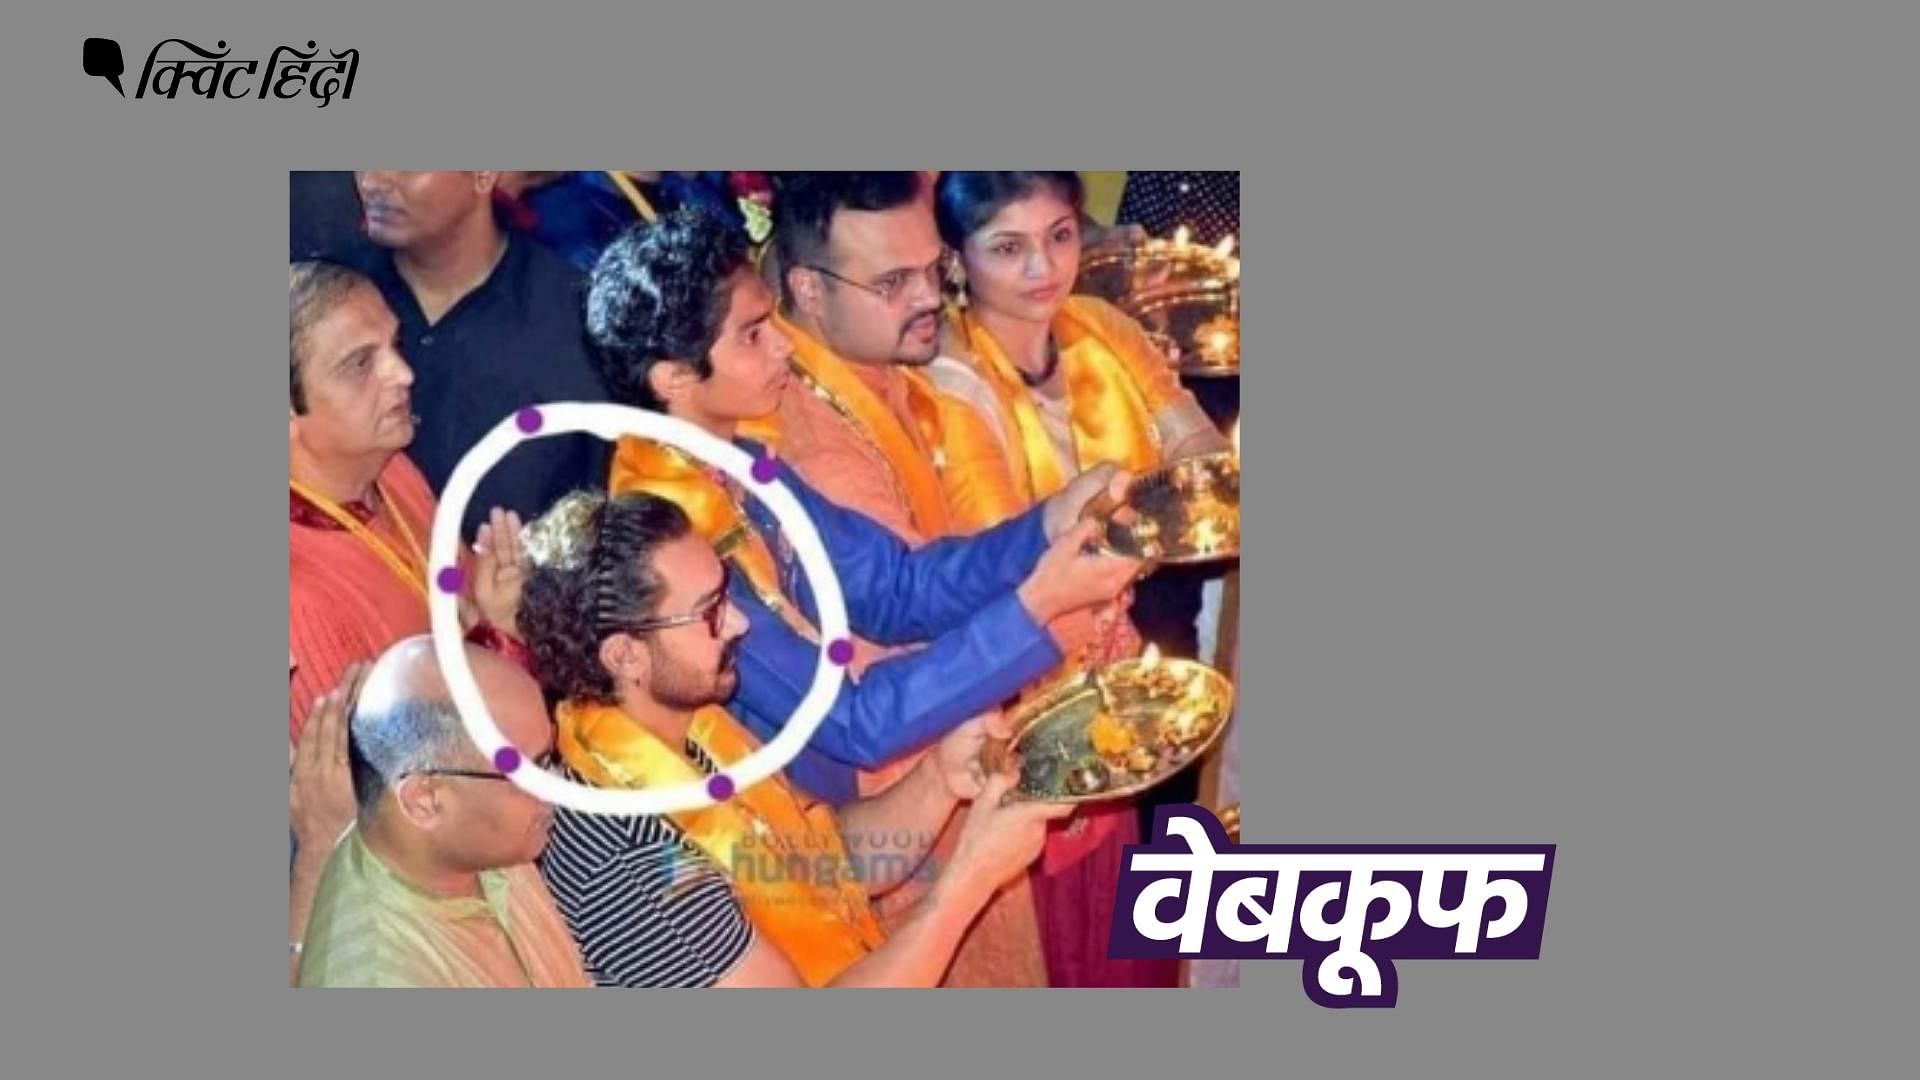 <div class="paragraphs"><p>पूजा करते आमिर खान की फोटो लाल सिंह चड्ढा से जोड़कर वायरल</p></div>